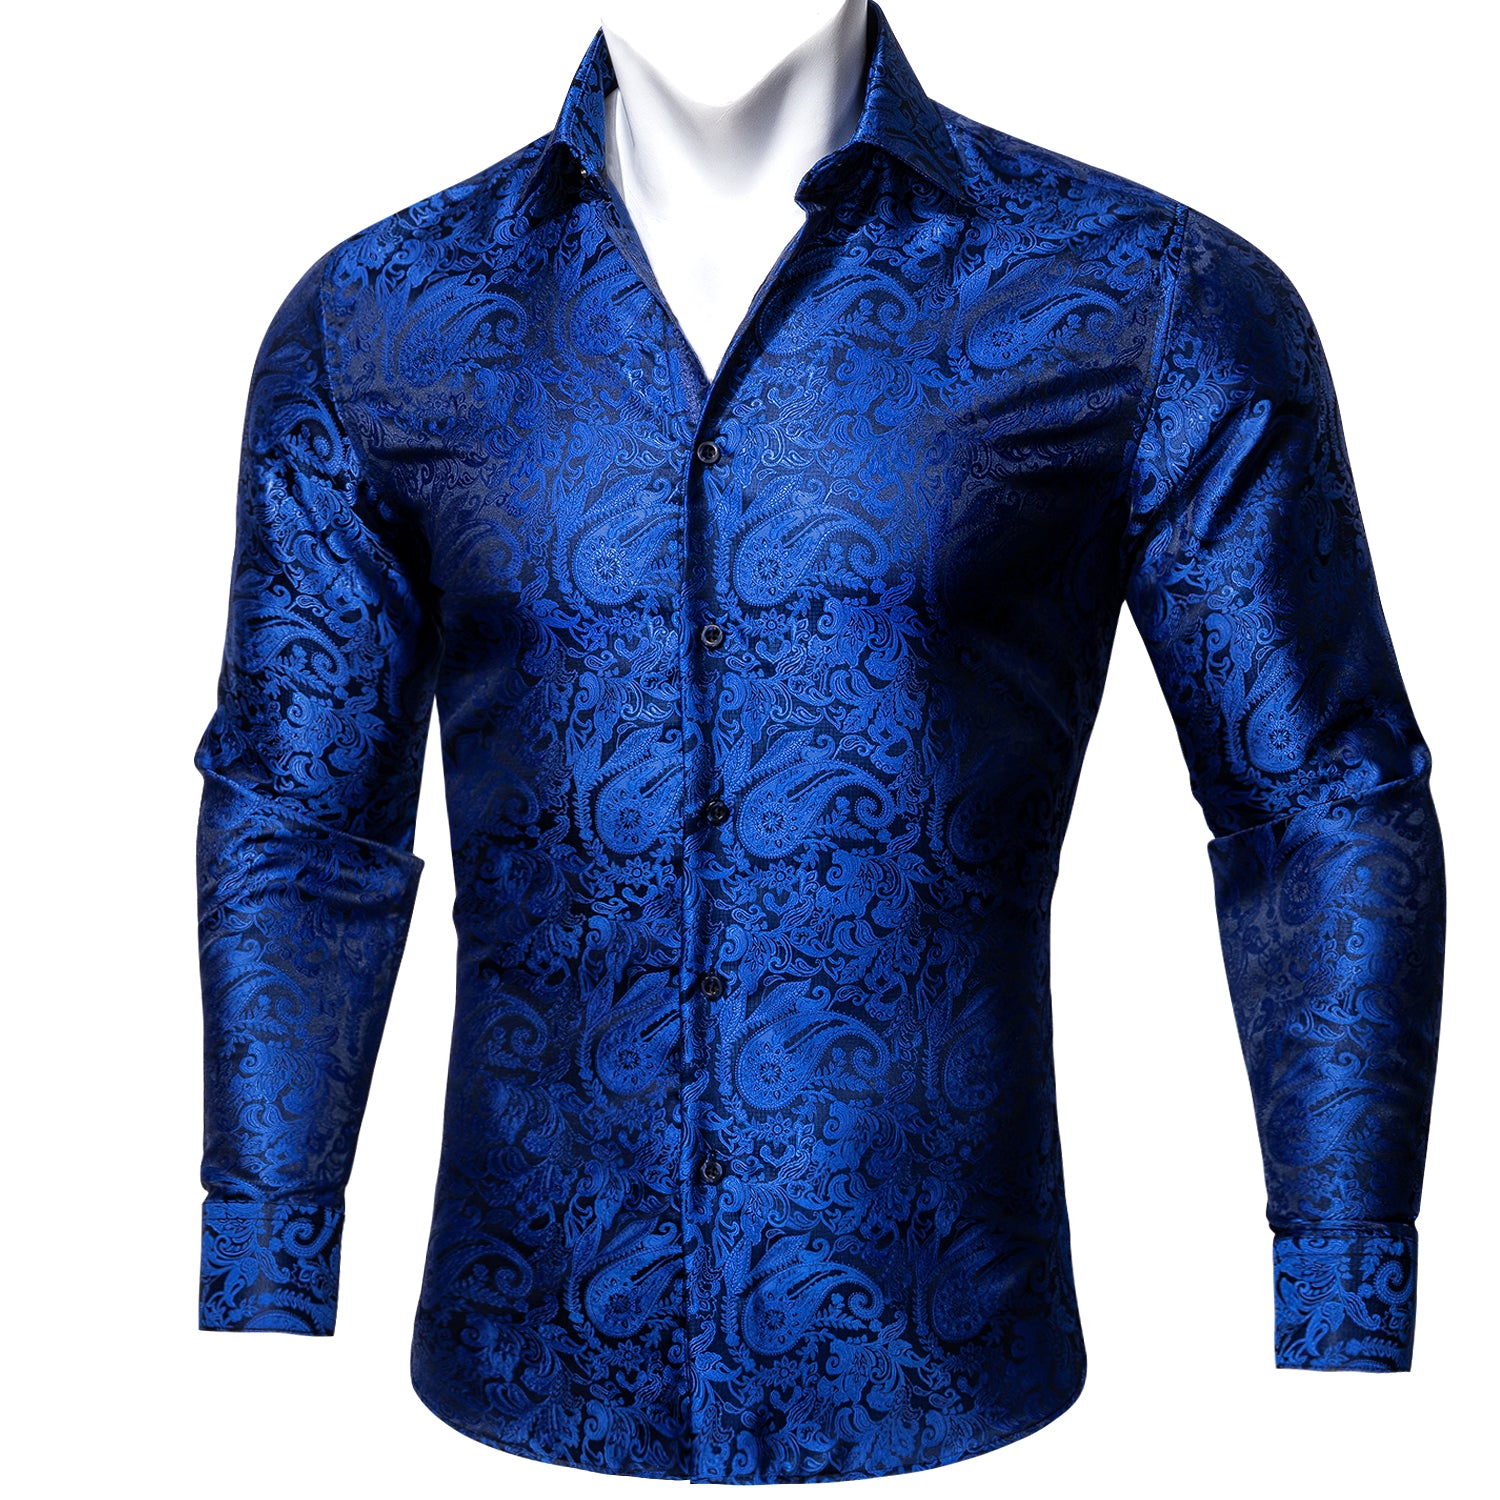 Barry.wang Fashionable Blue Paisley Silk Shirt